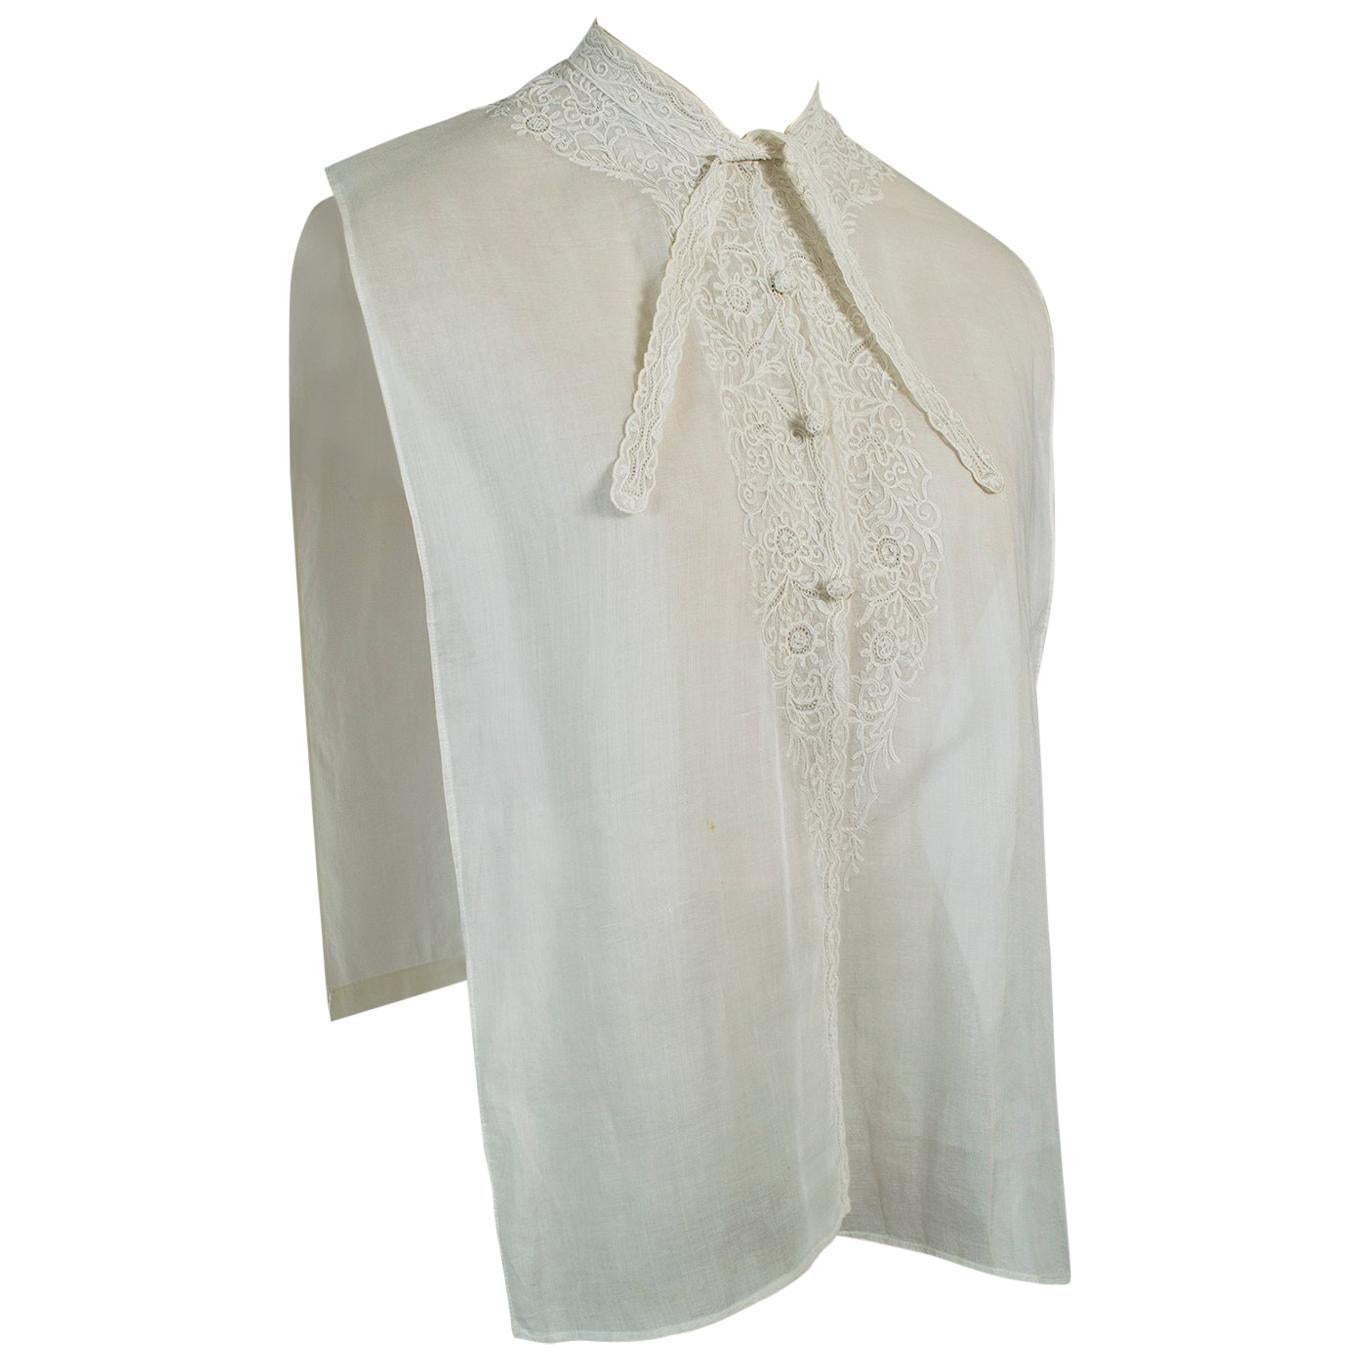 Edwardian Sheer Ecru Tie Neck Crewel Work Neckcloth Shirtfront Dickey-S-M, 1910s For Sale